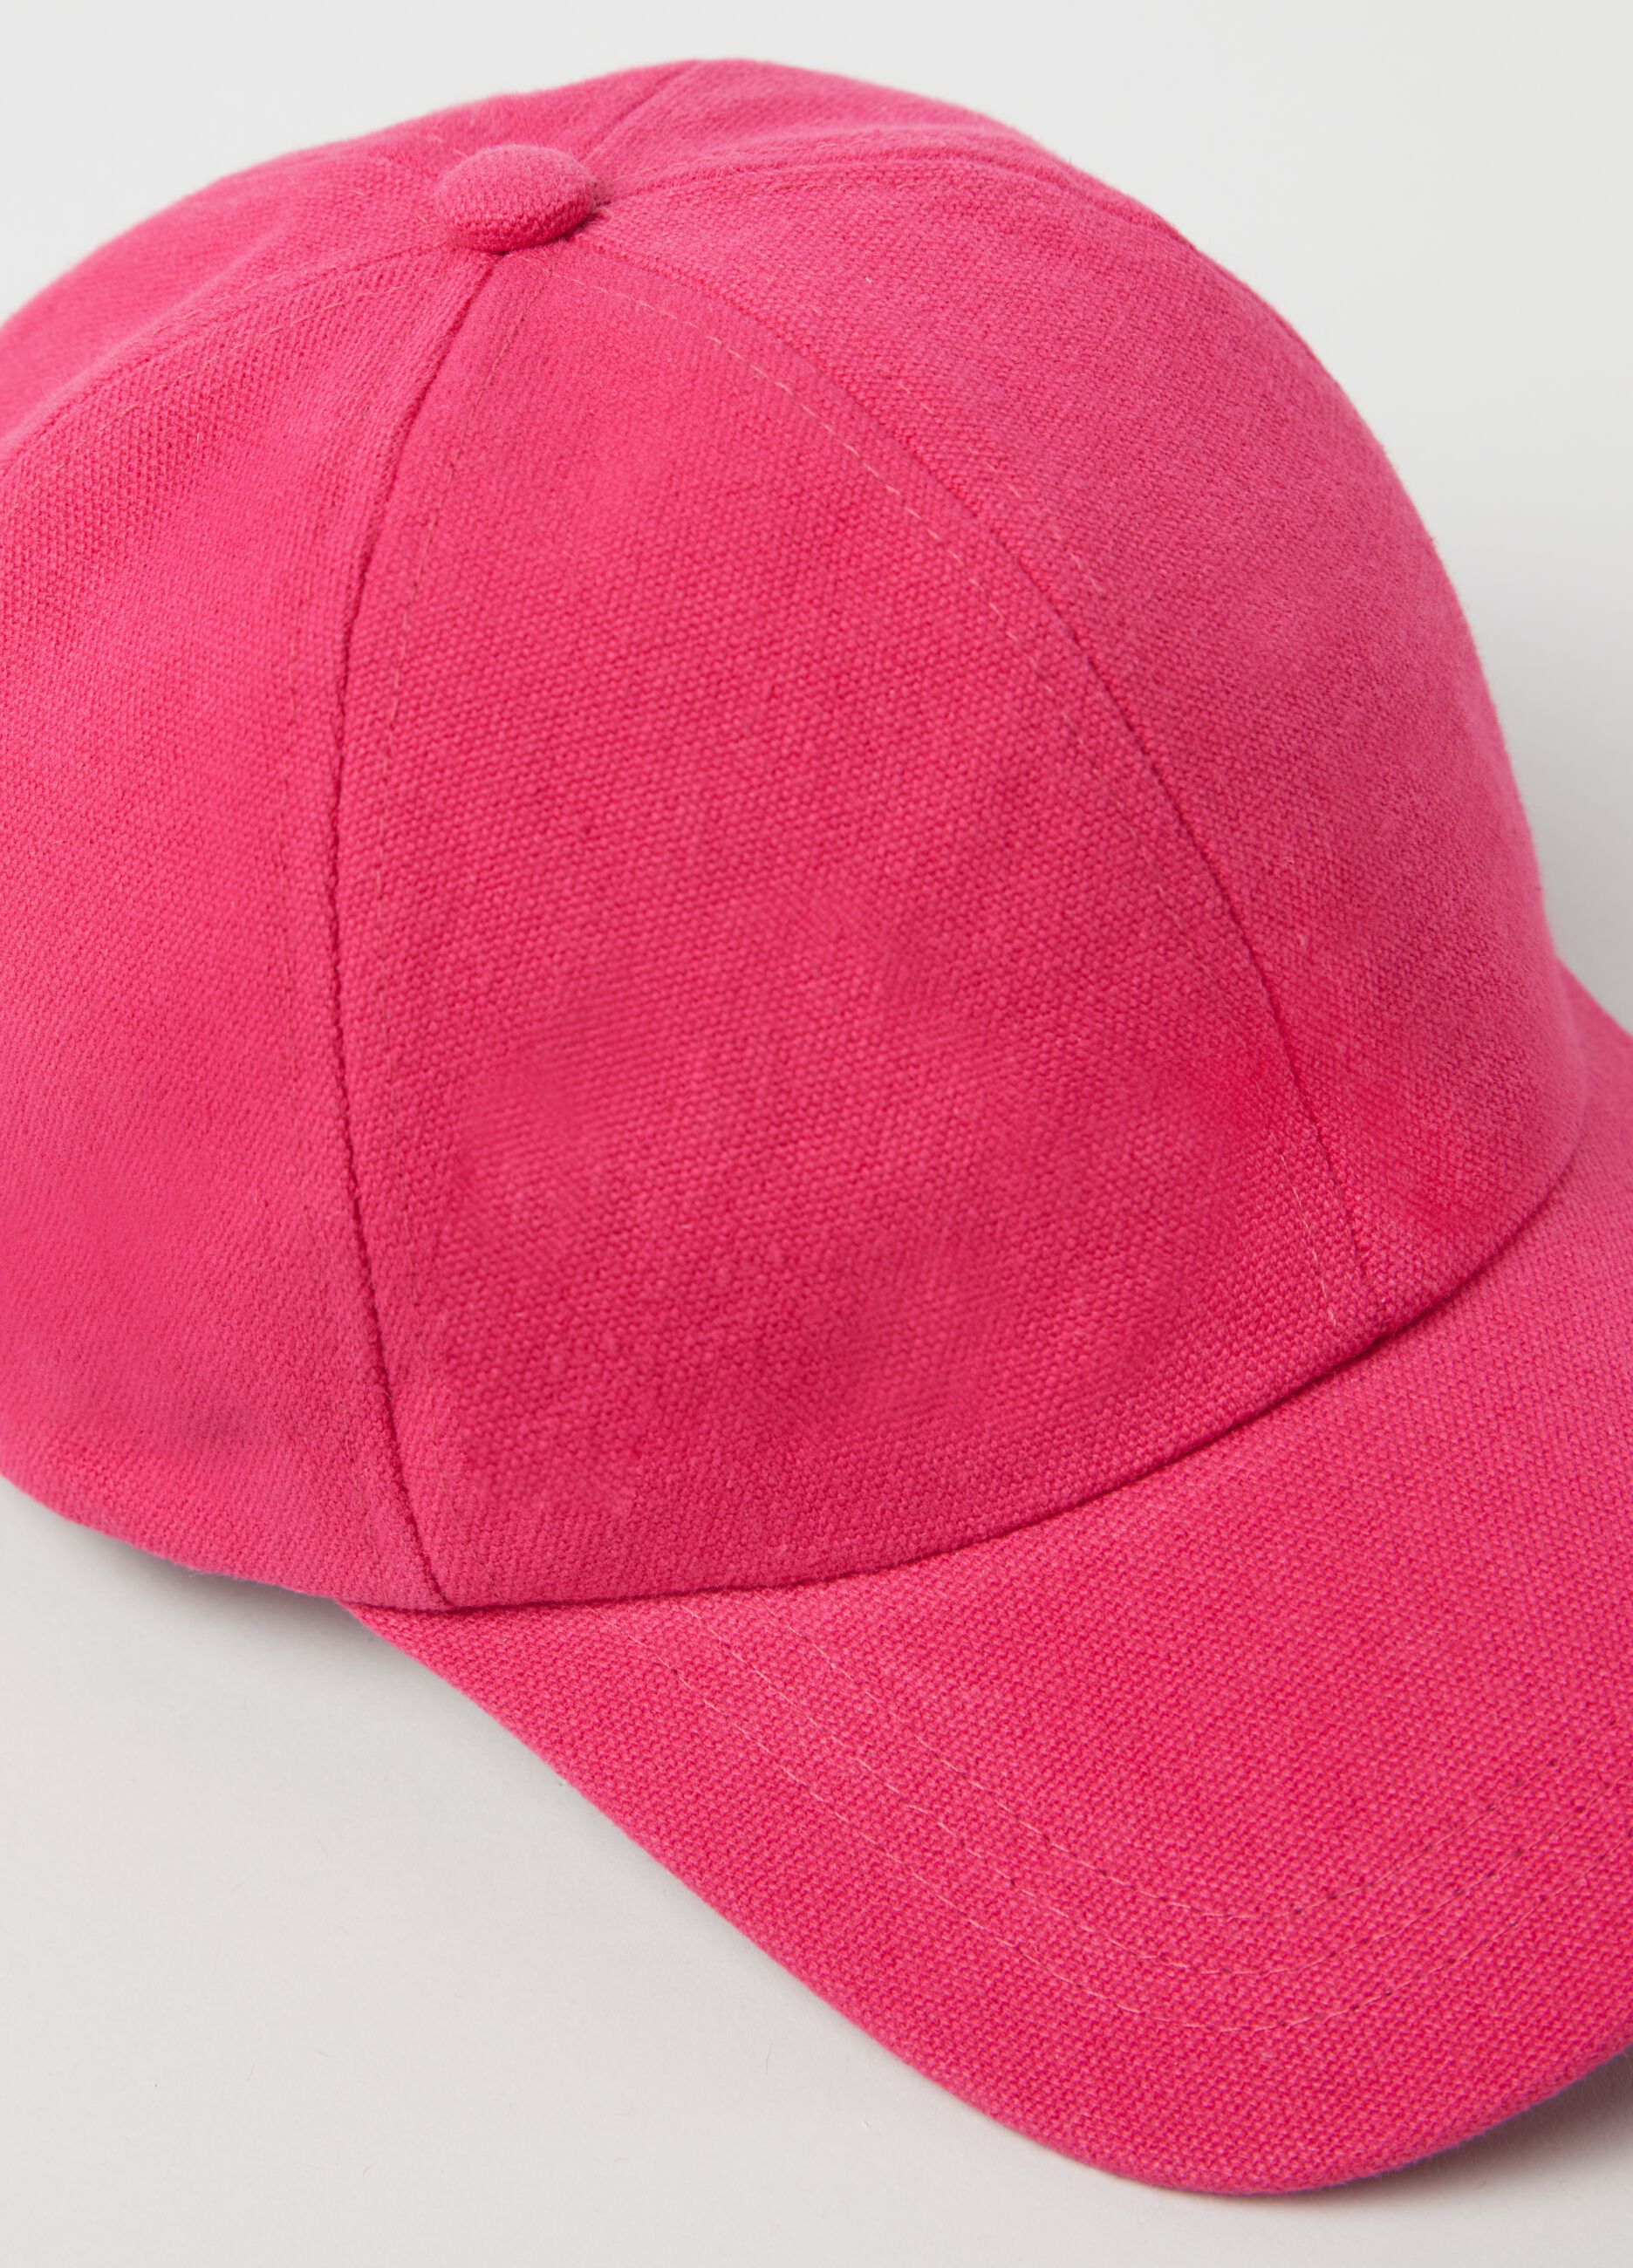 Solid colour baseball cap